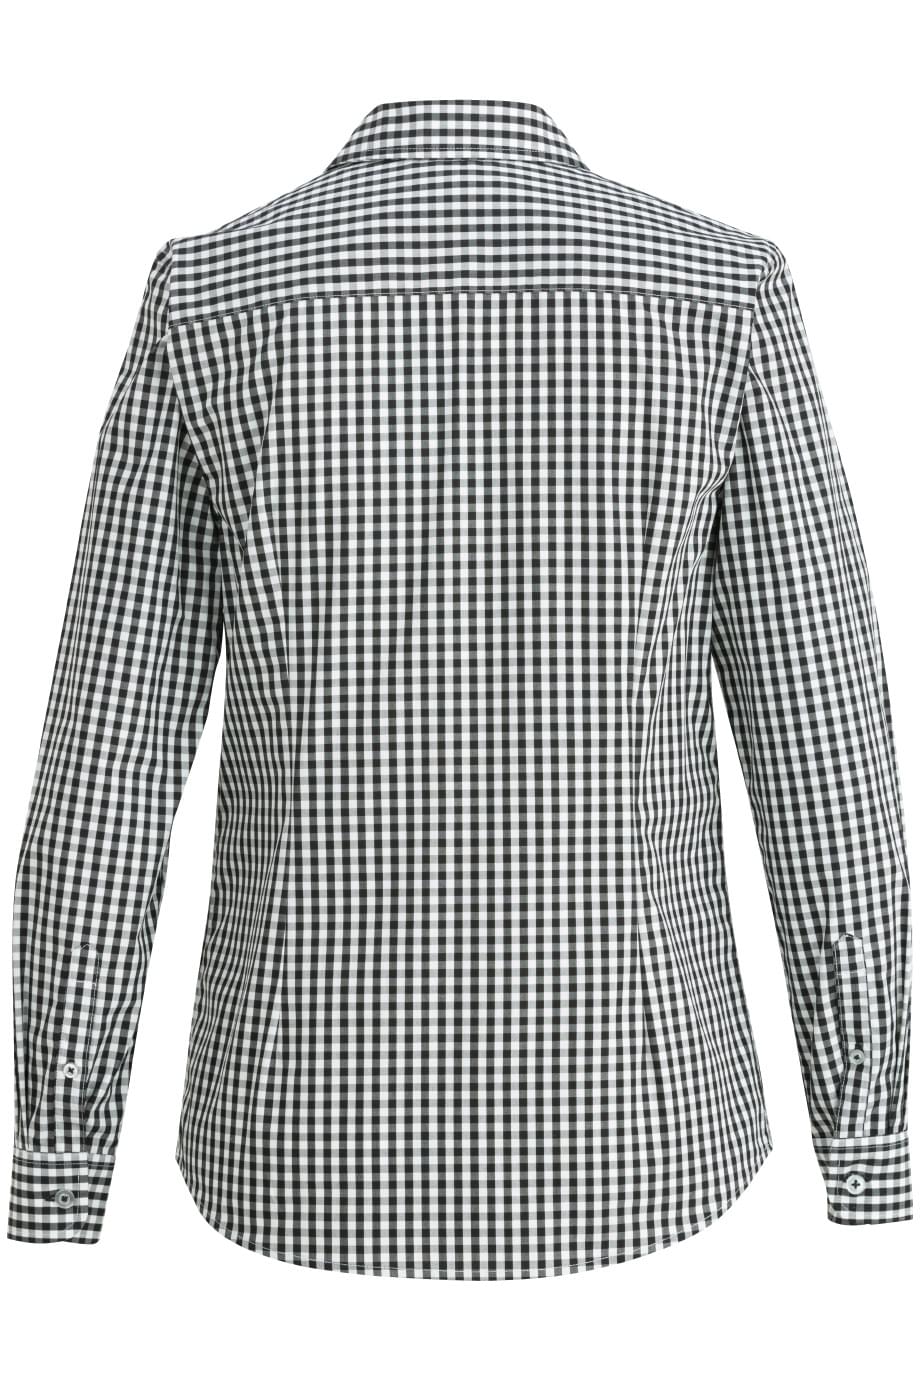 COMFORT STRETCH POPLIN | Edwards Garment